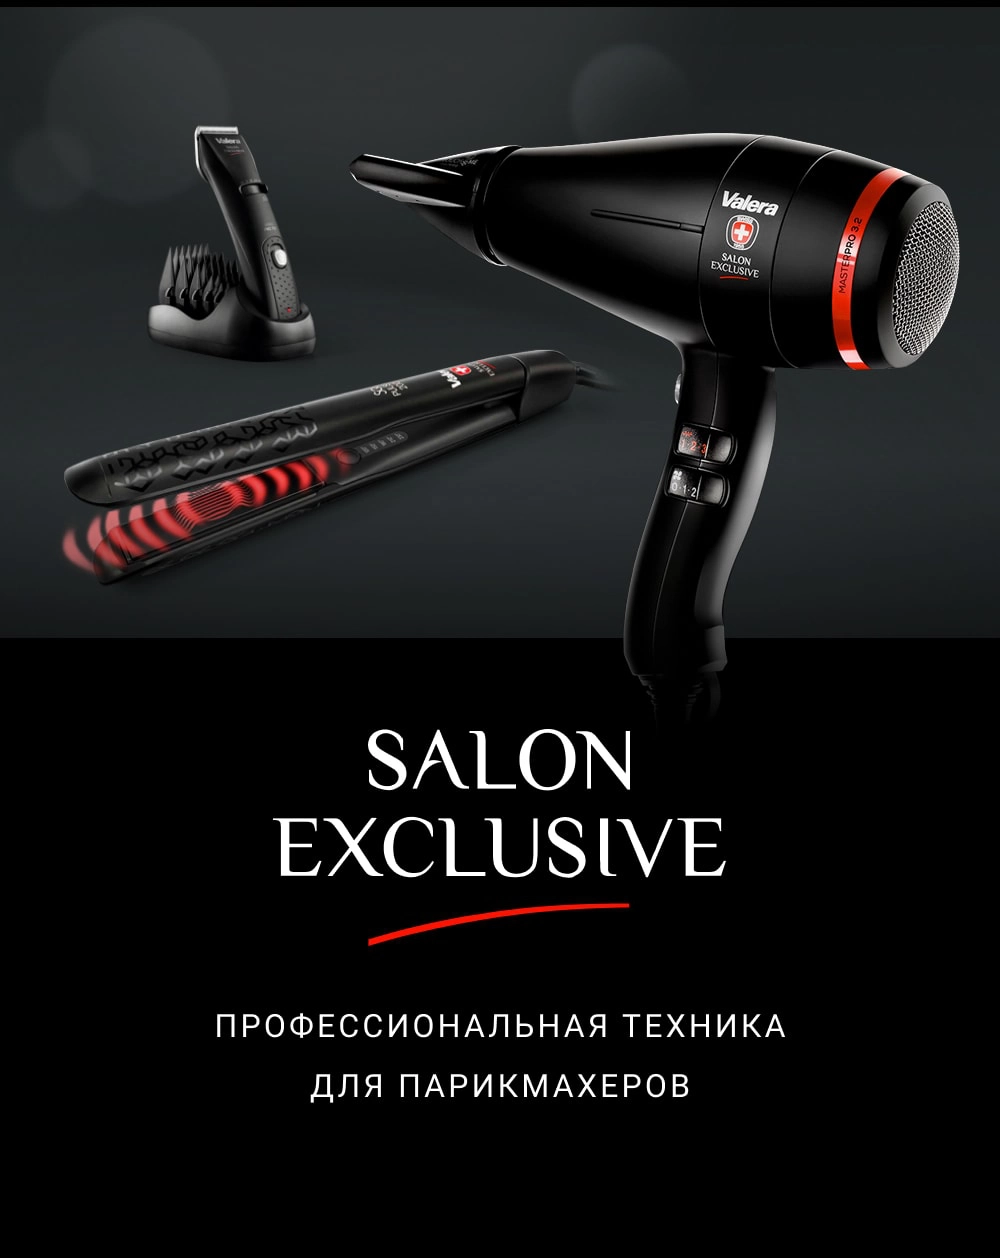 Salon exclusive